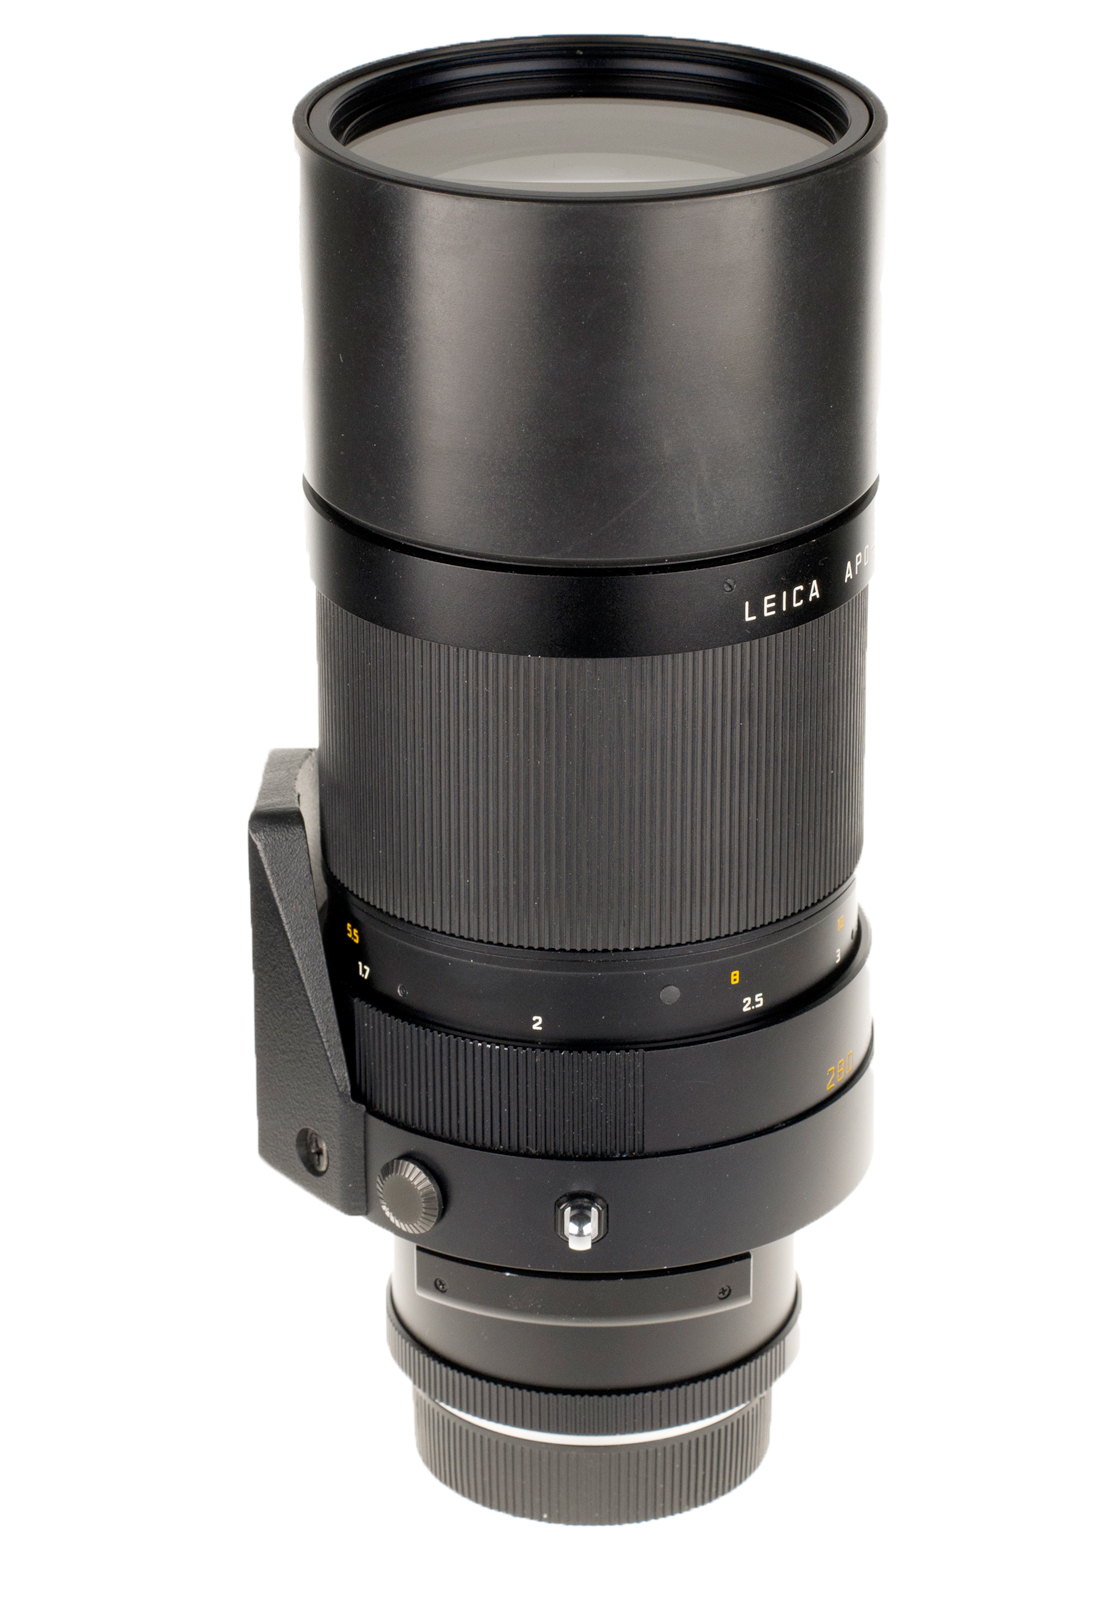 Leica APO-Telyt-R 1:4/280mm + CLA Certificate